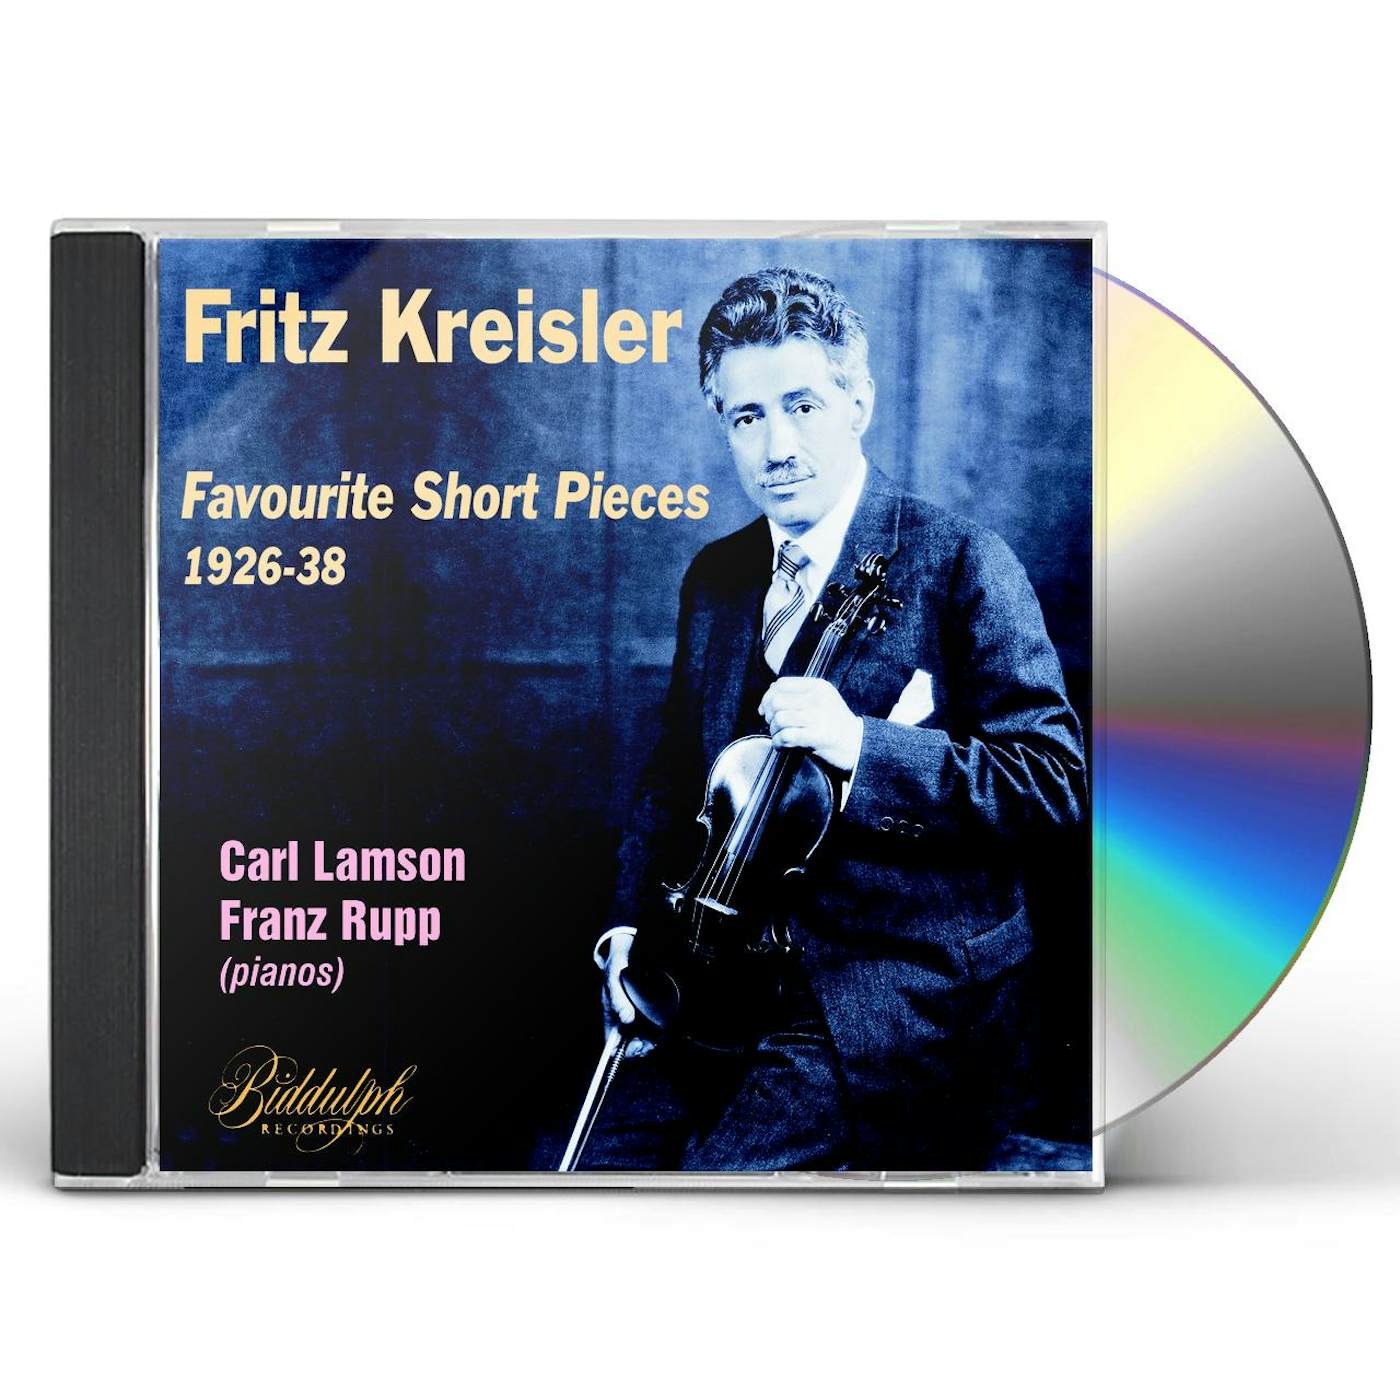 FRITZ KREISLER: FAVOURITE SHORT PIECES 1926-38 CD